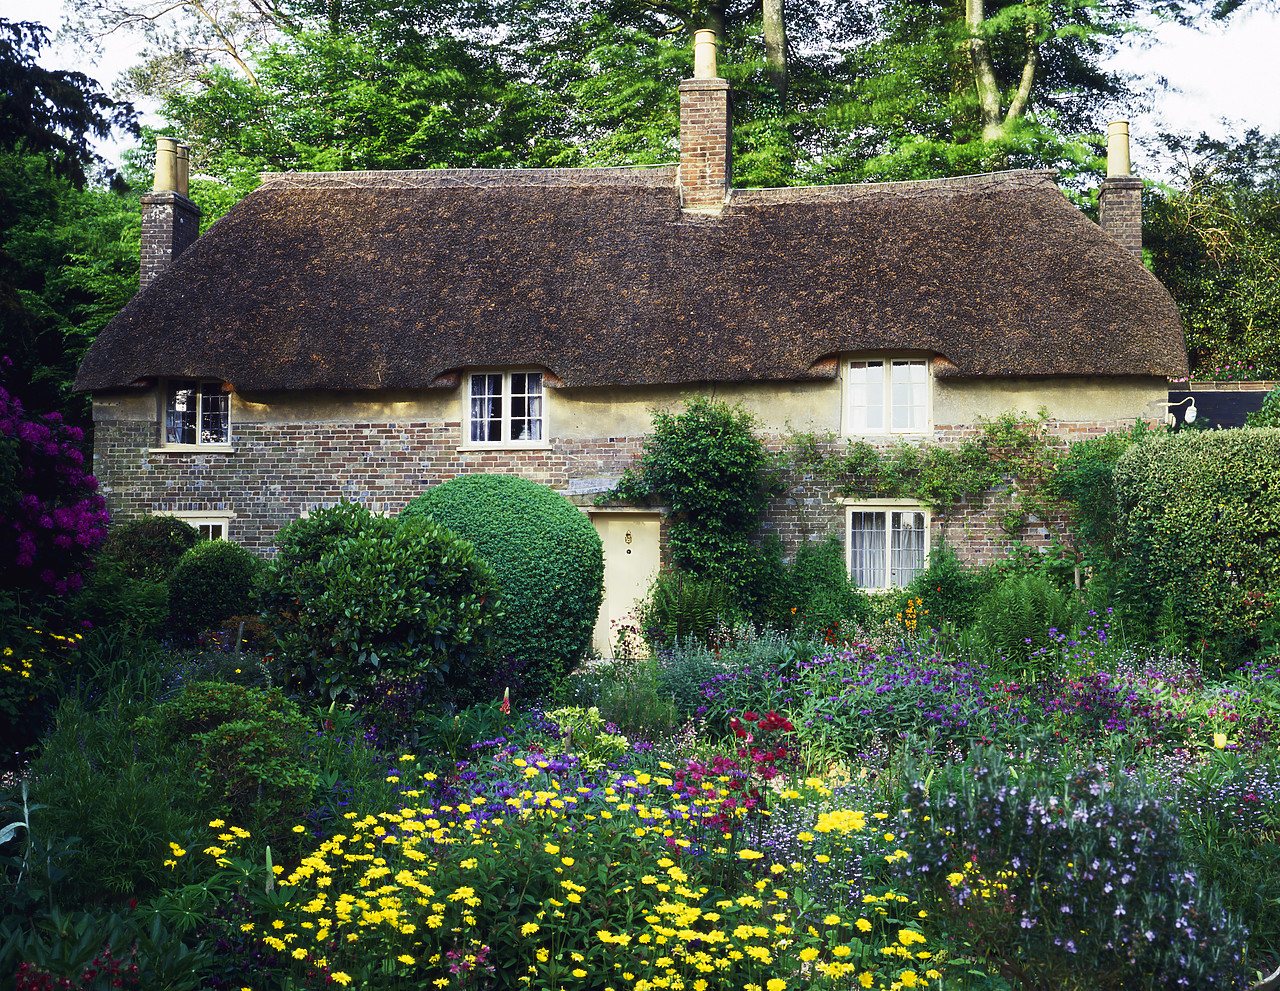 #87901-1 - Thomas Hardy's Cottage & Garden, Higher Bockhampton, Dorset, England